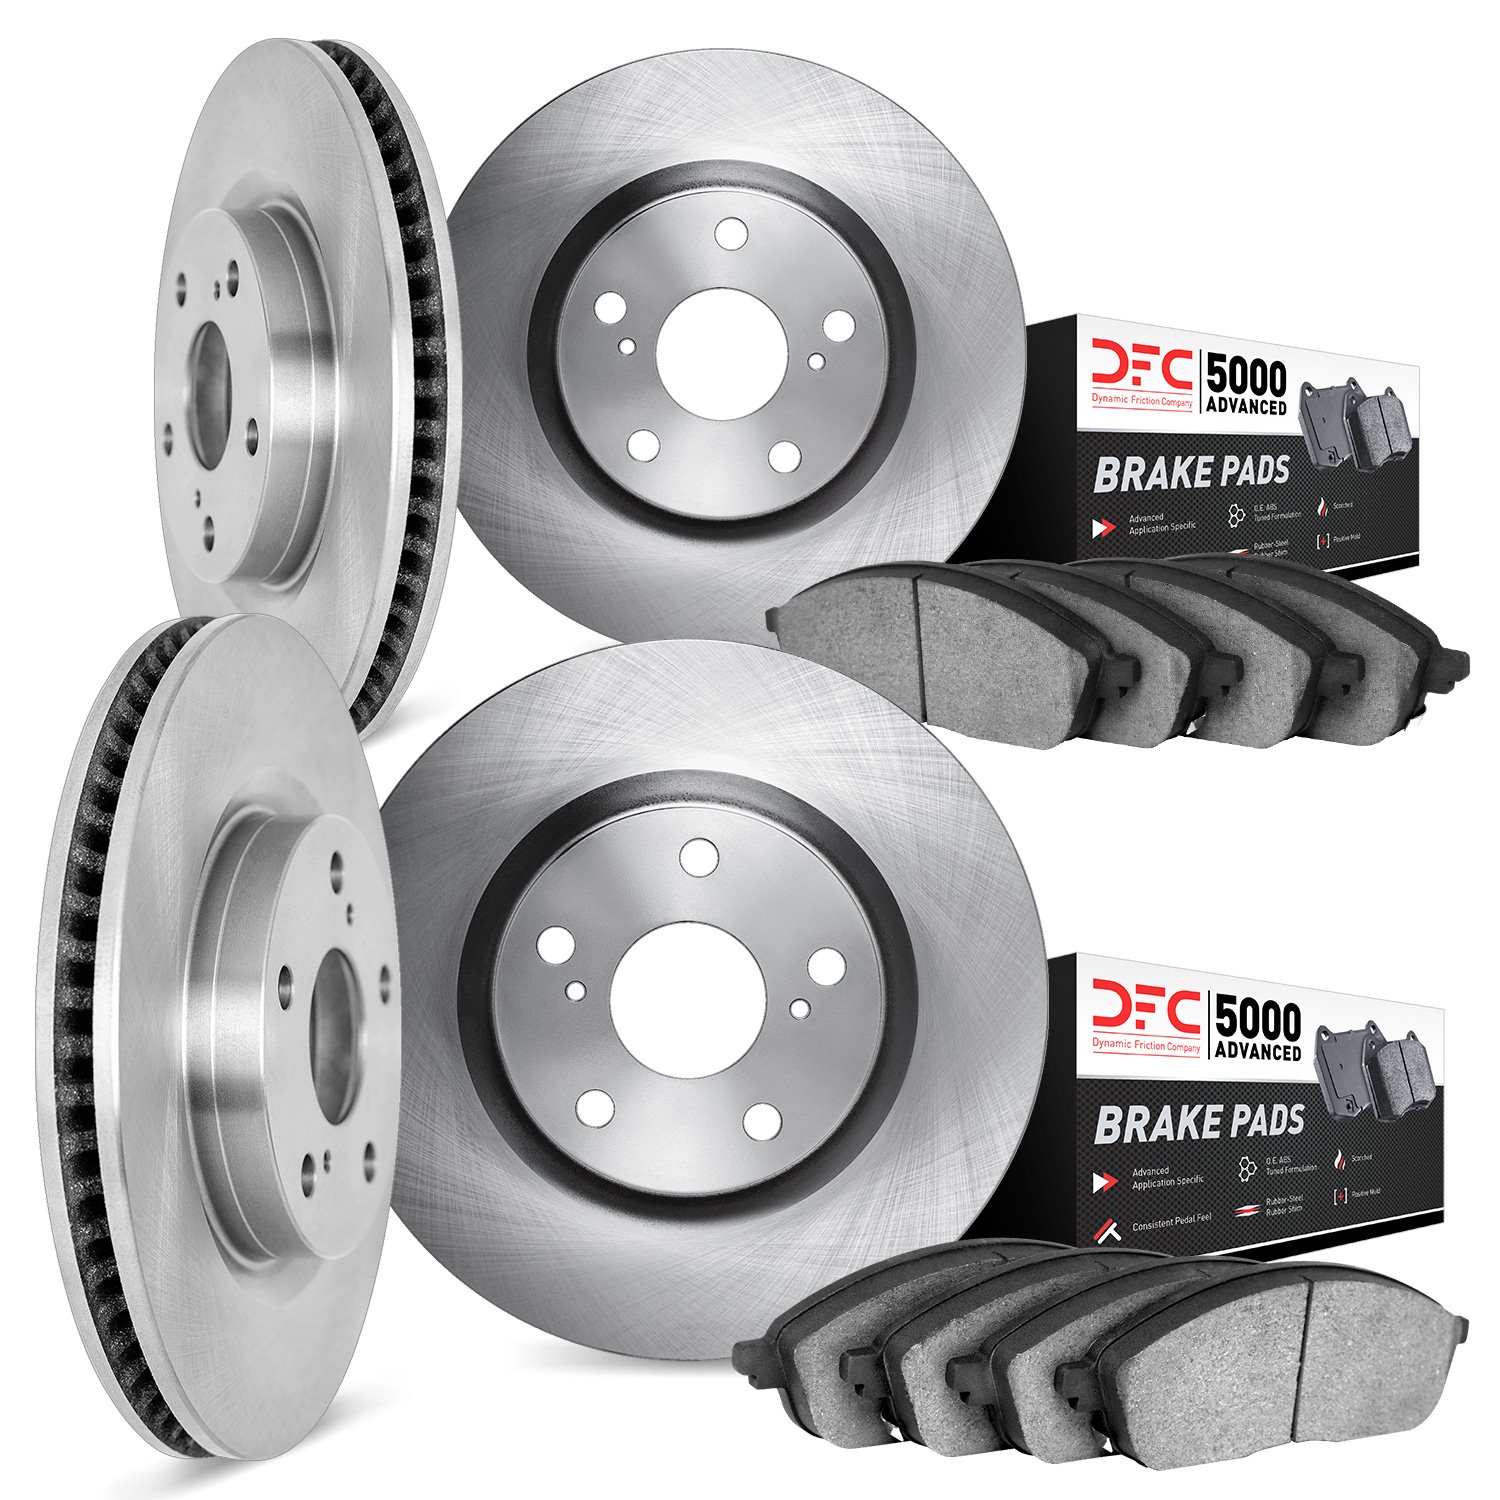 6504-39081 Brake Rotors w/5000 Advanced Brake Pads Kit, Fits Select Mopar, Position: Front and Rear